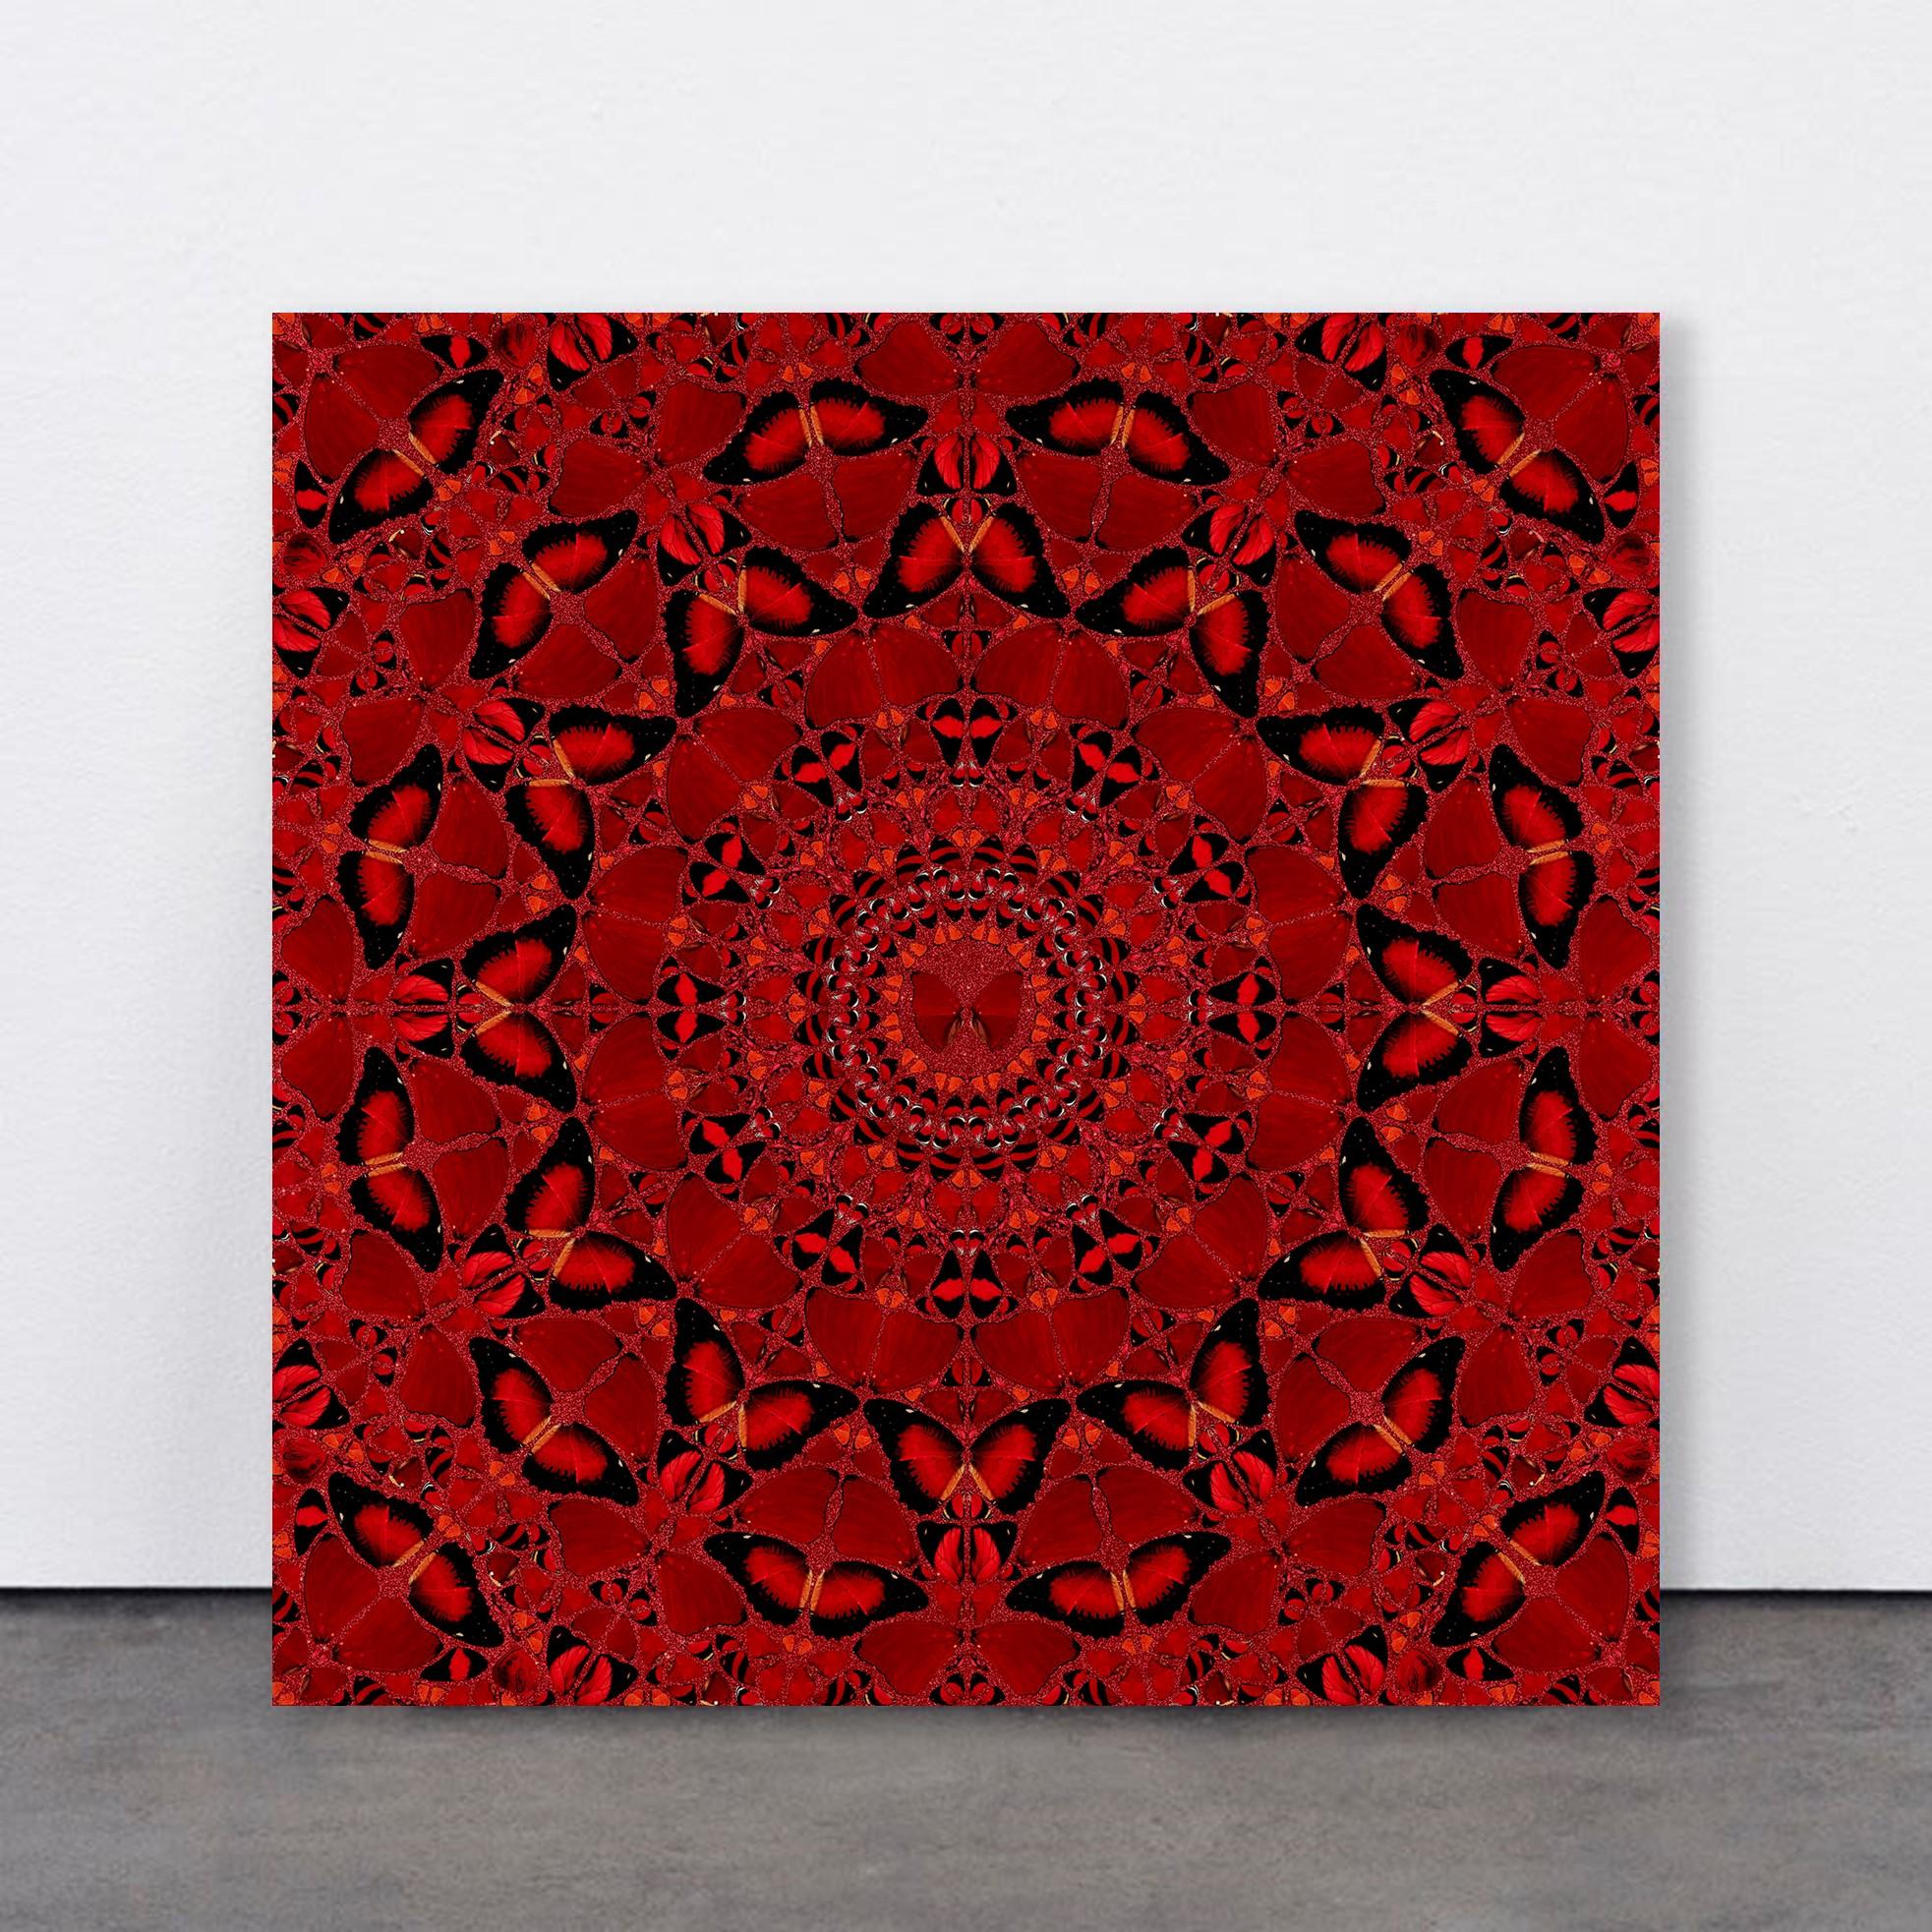 Suiko by Damien Hirst, The Empresses, Red Butterflies kaleidoscope effect